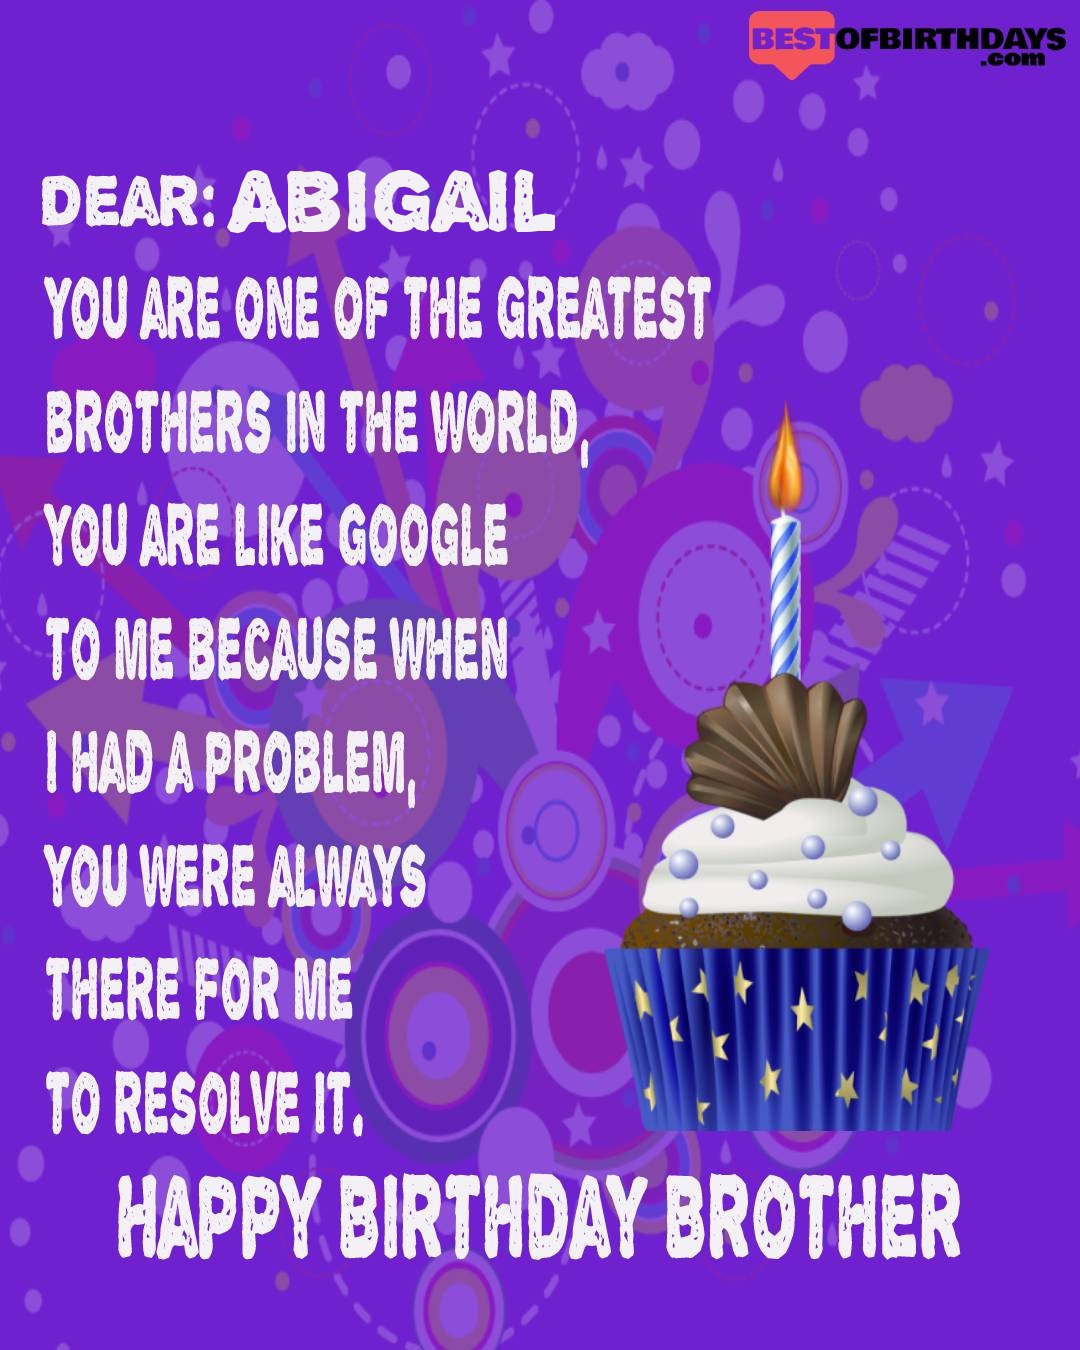 Happy birthday abigail bhai brother bro